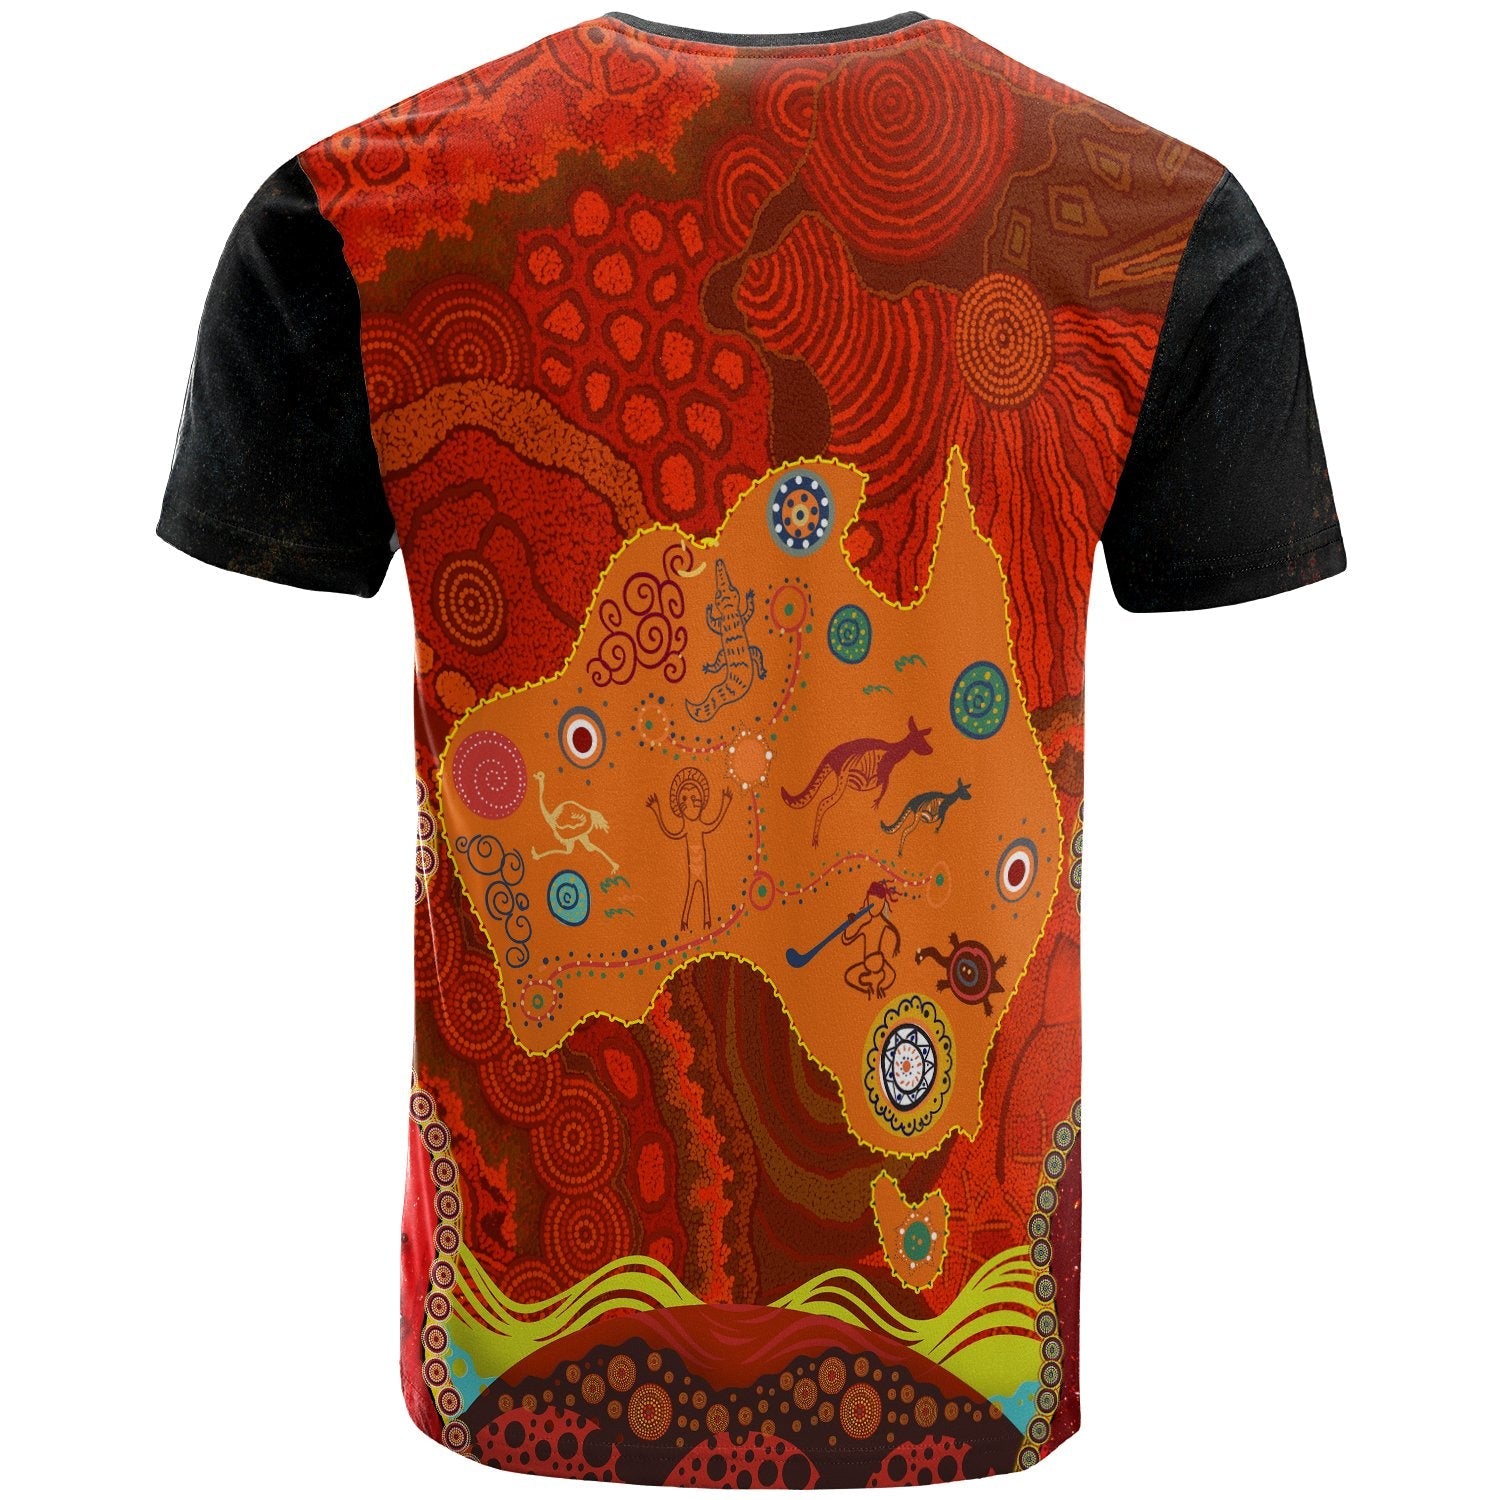 aboriginal-t-shirt-naidoc-week-2020-version-red